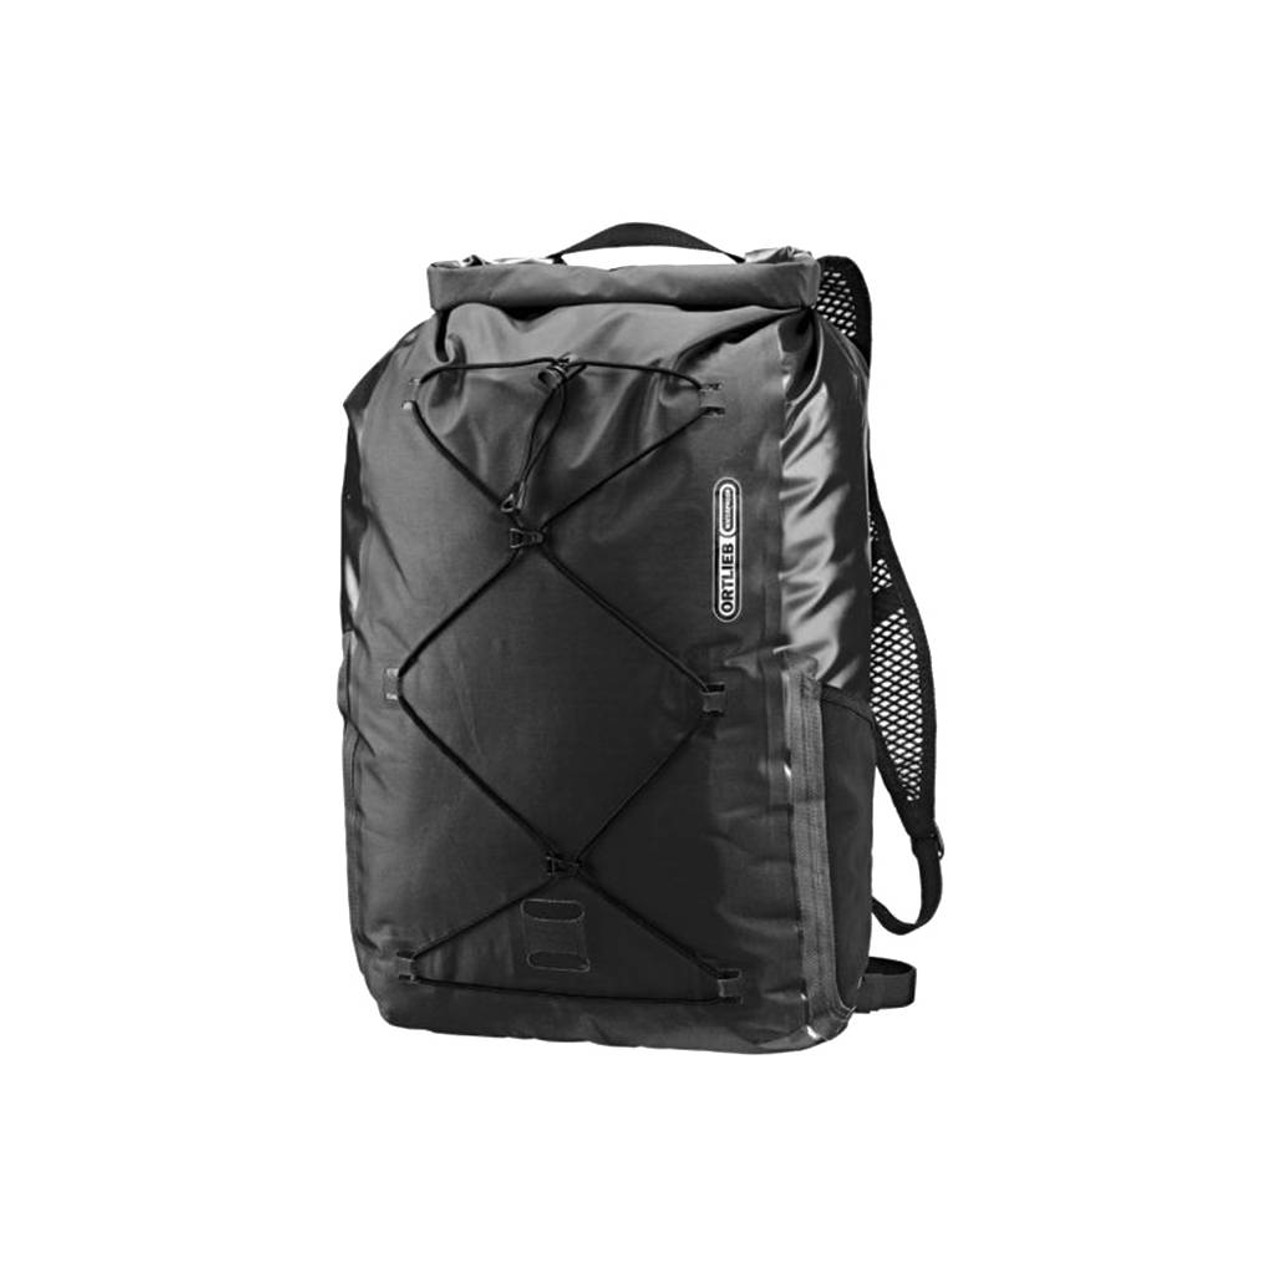 Light-pack Two 25 Litre Black Waterproof Daypack